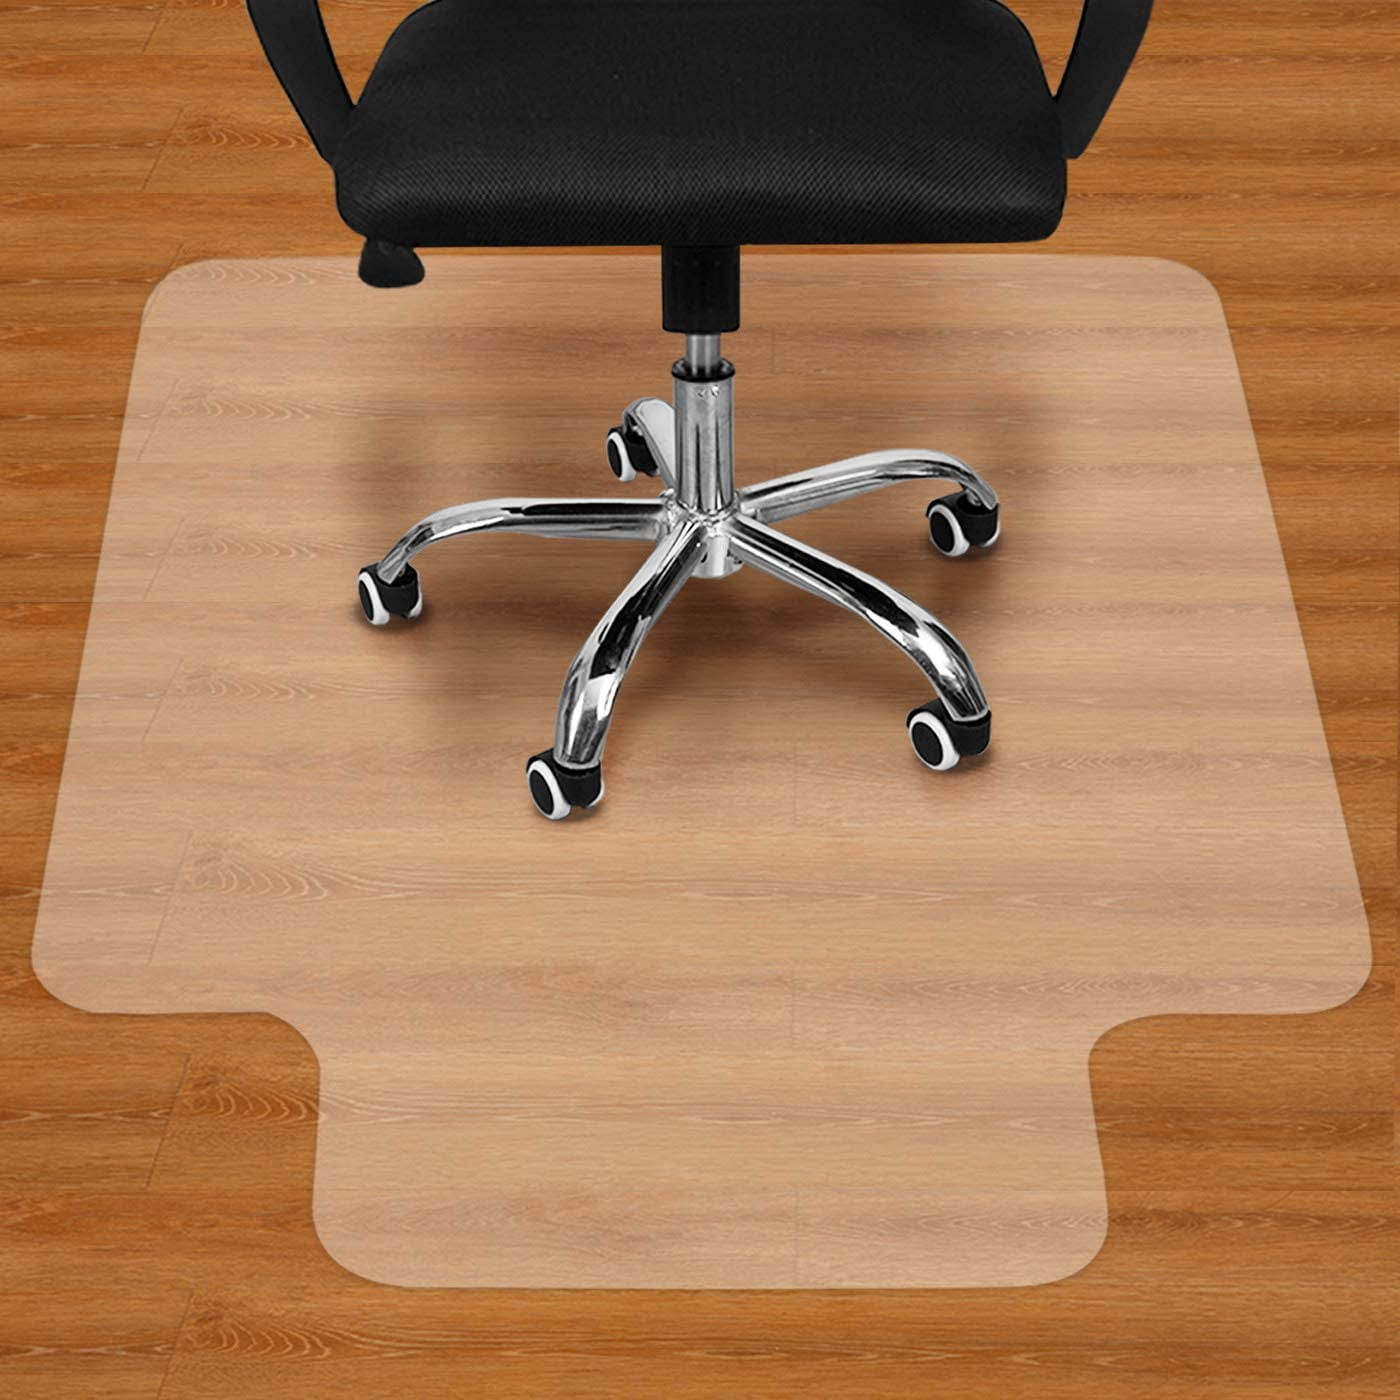 Protector Floor Mat PVC Transparent Rectangular Floor Protective Mat Non Slip Chair Carpet for Computer Chair Office 